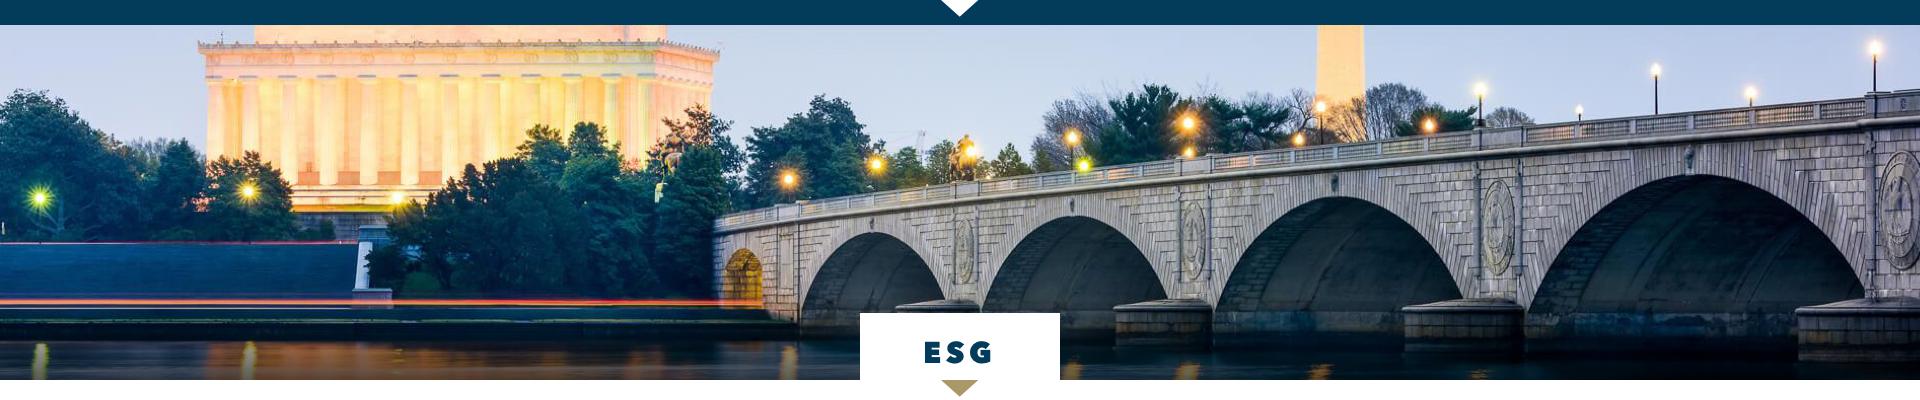 ESG. Image shows the Memorial Bridge and the Lincoln Memorial in Washington, D.C.